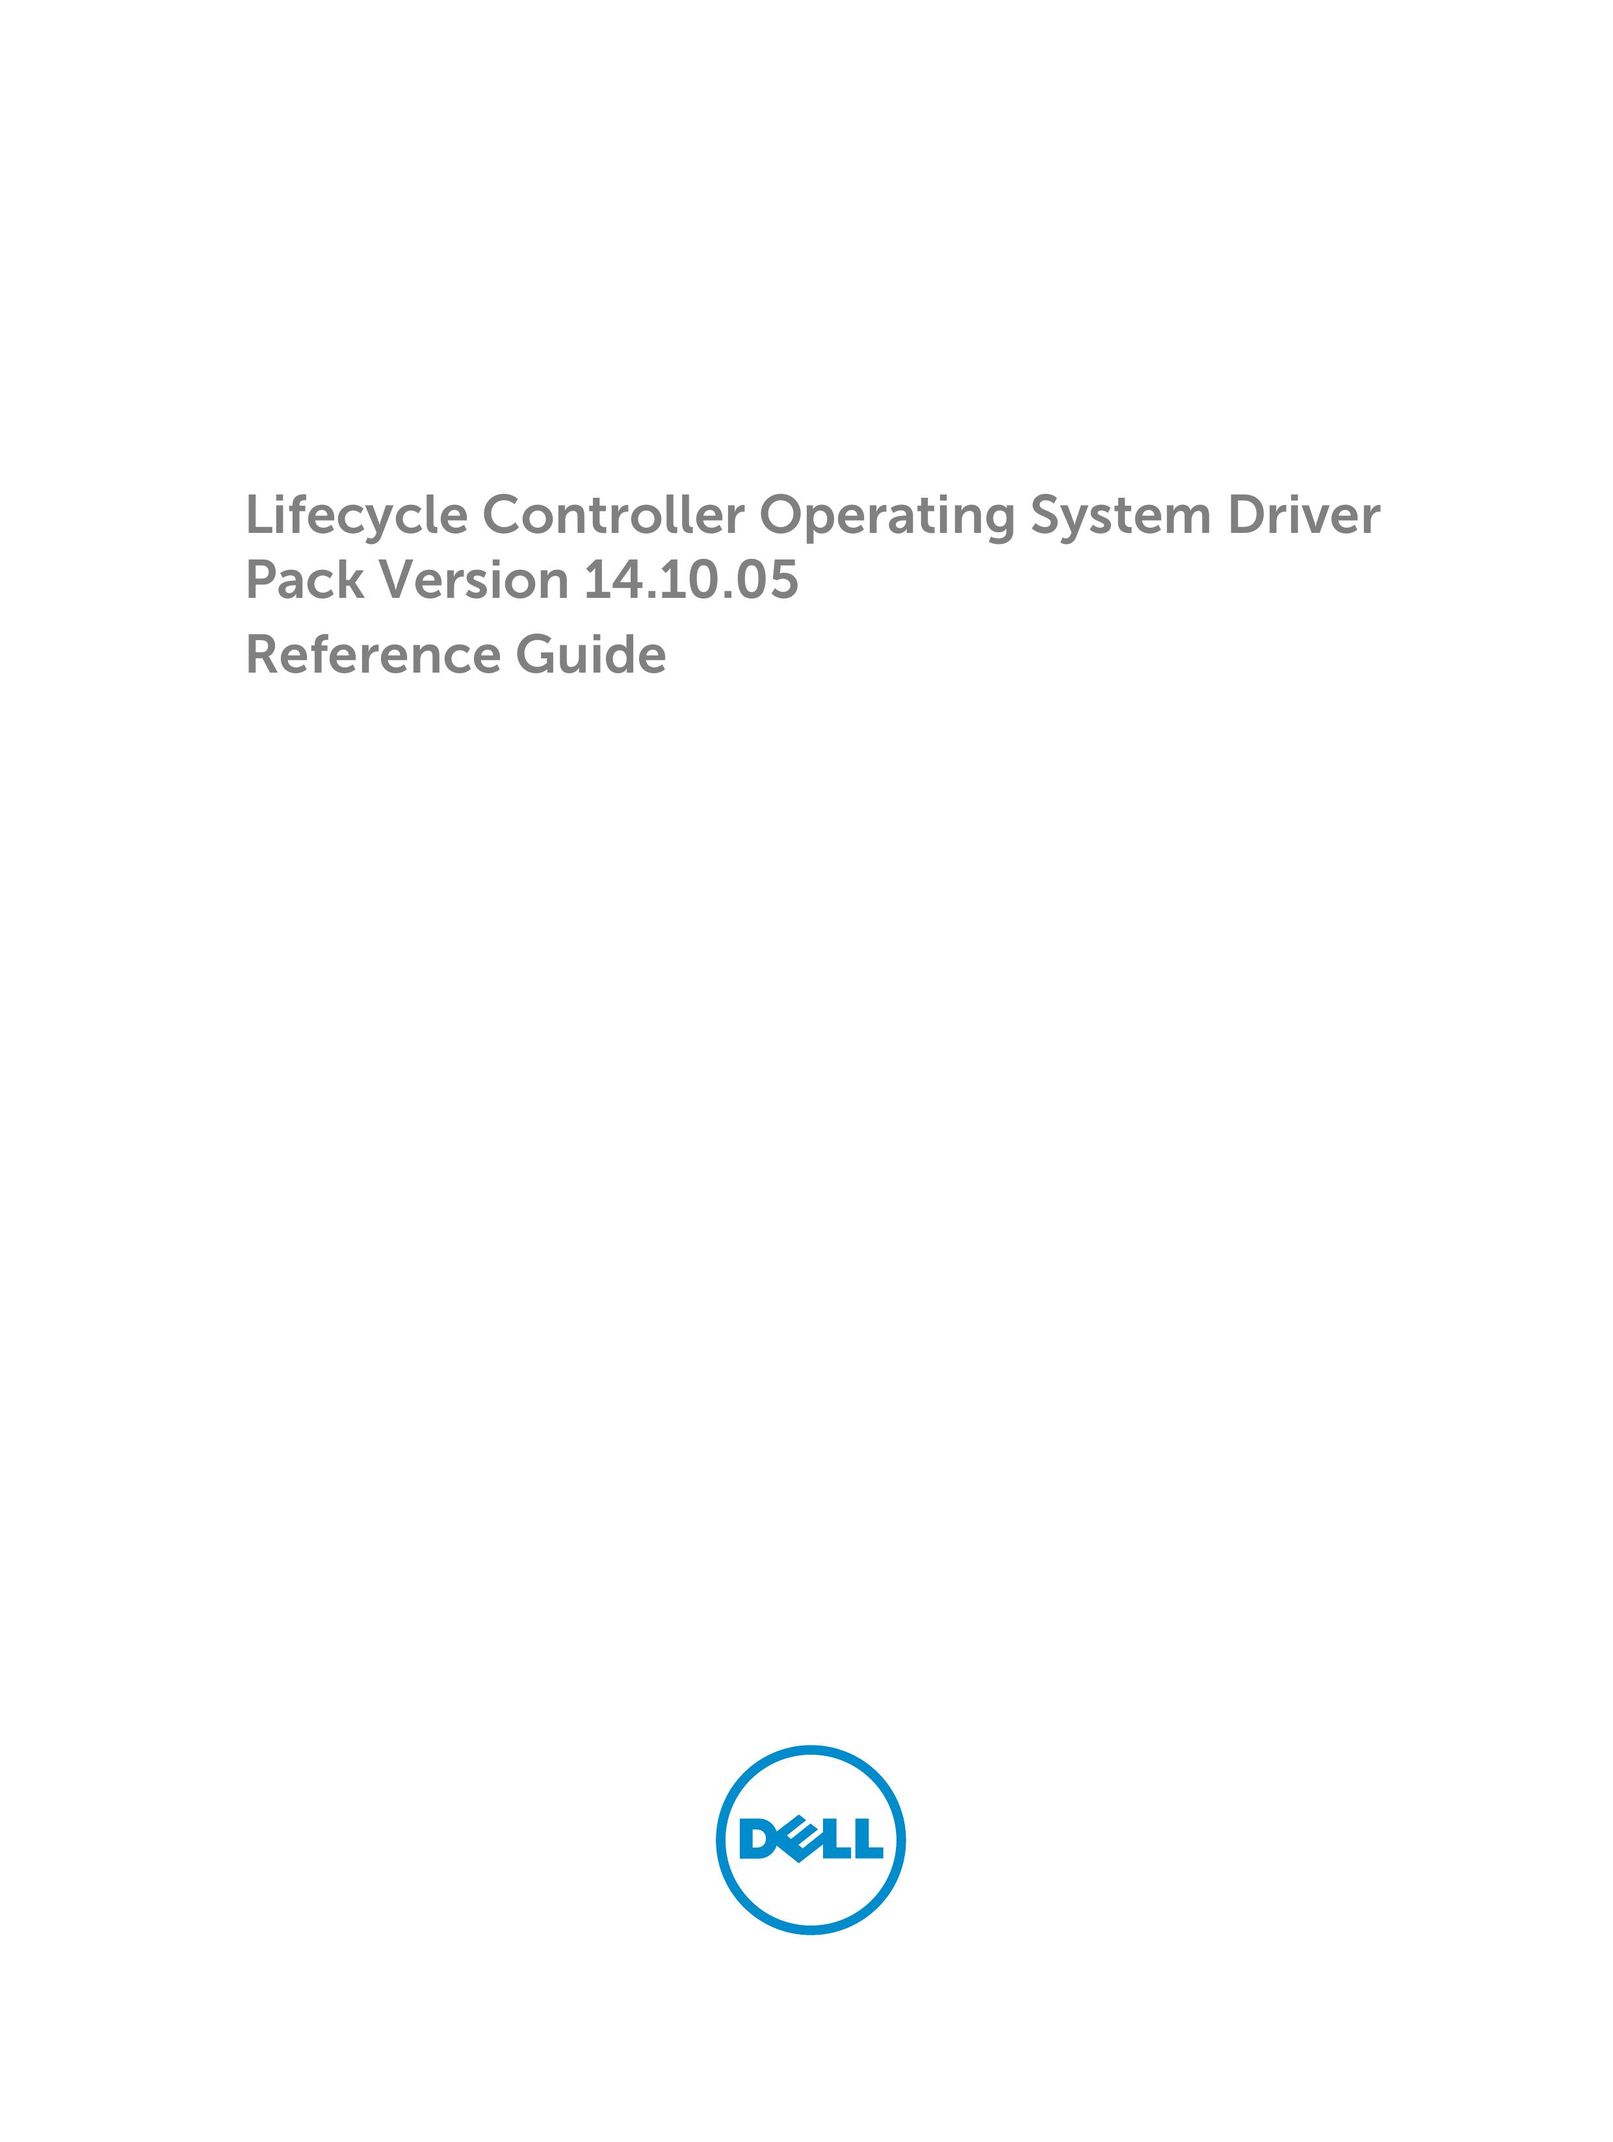 Dell 14.10.05 Welder User Manual